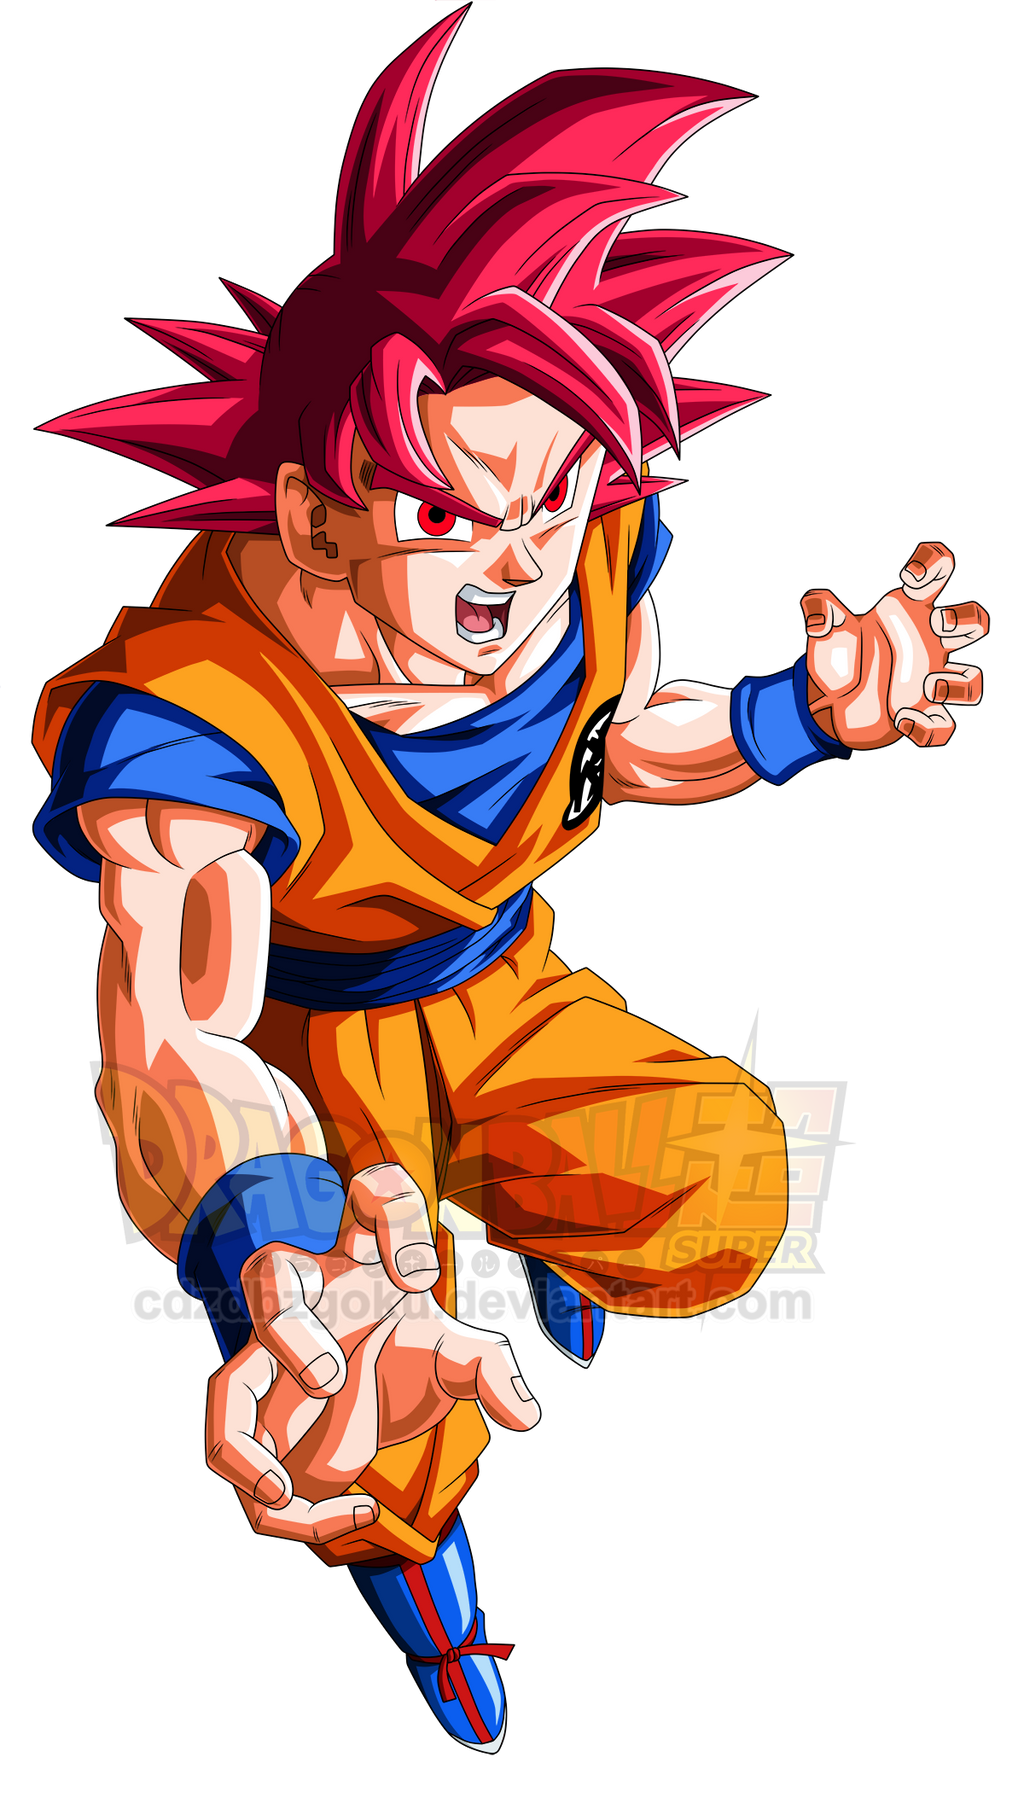 Goku PNG Transparent Images Free Download - Pngfre